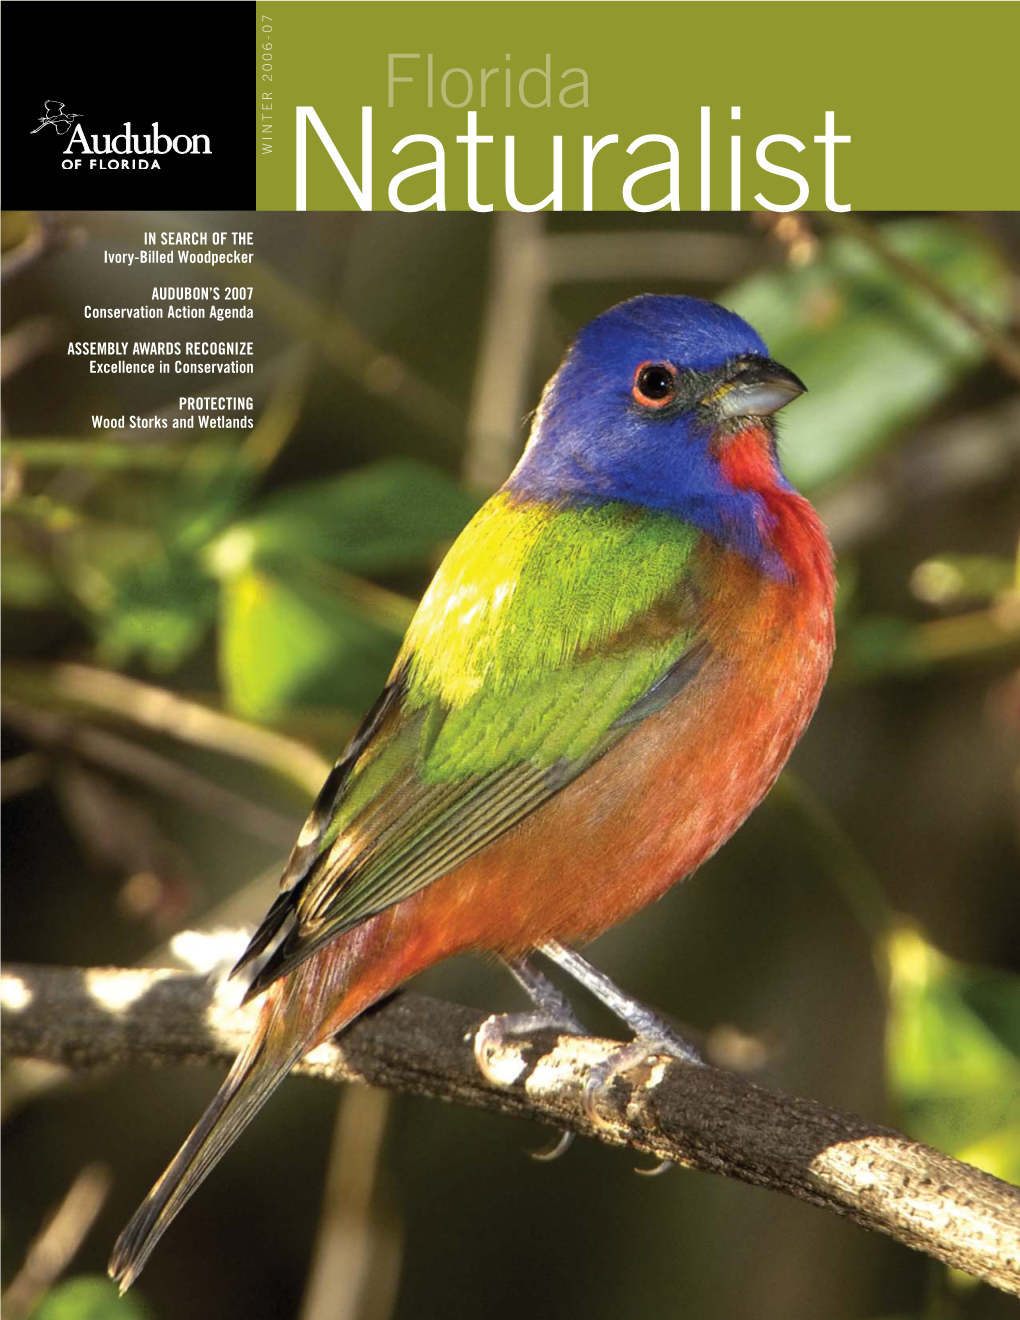 Audubon Florida Naturalist Magazine Winter 2006